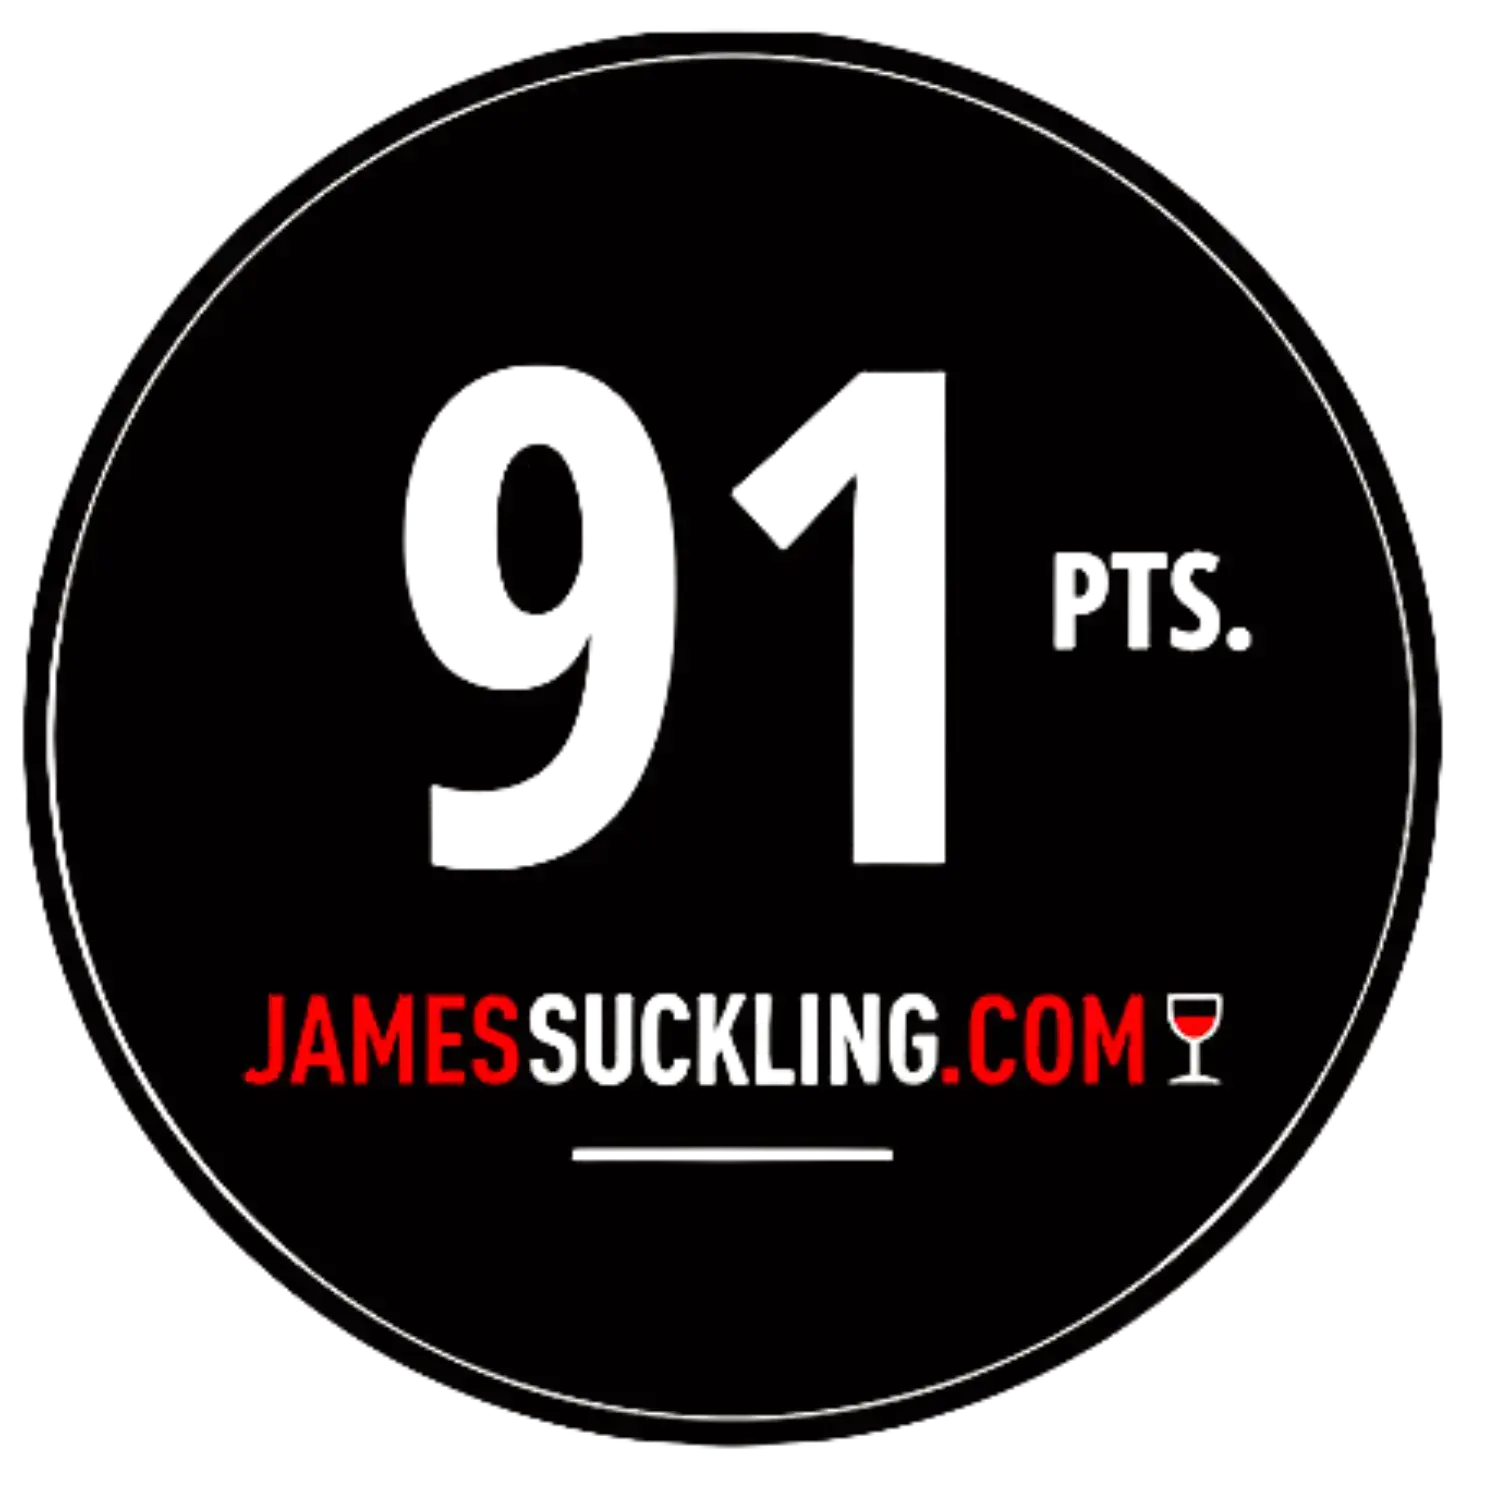 Sigla cu fundal negru si numarul de puncte in culoare alba reprezentand premiul James Suckling 91 puncte